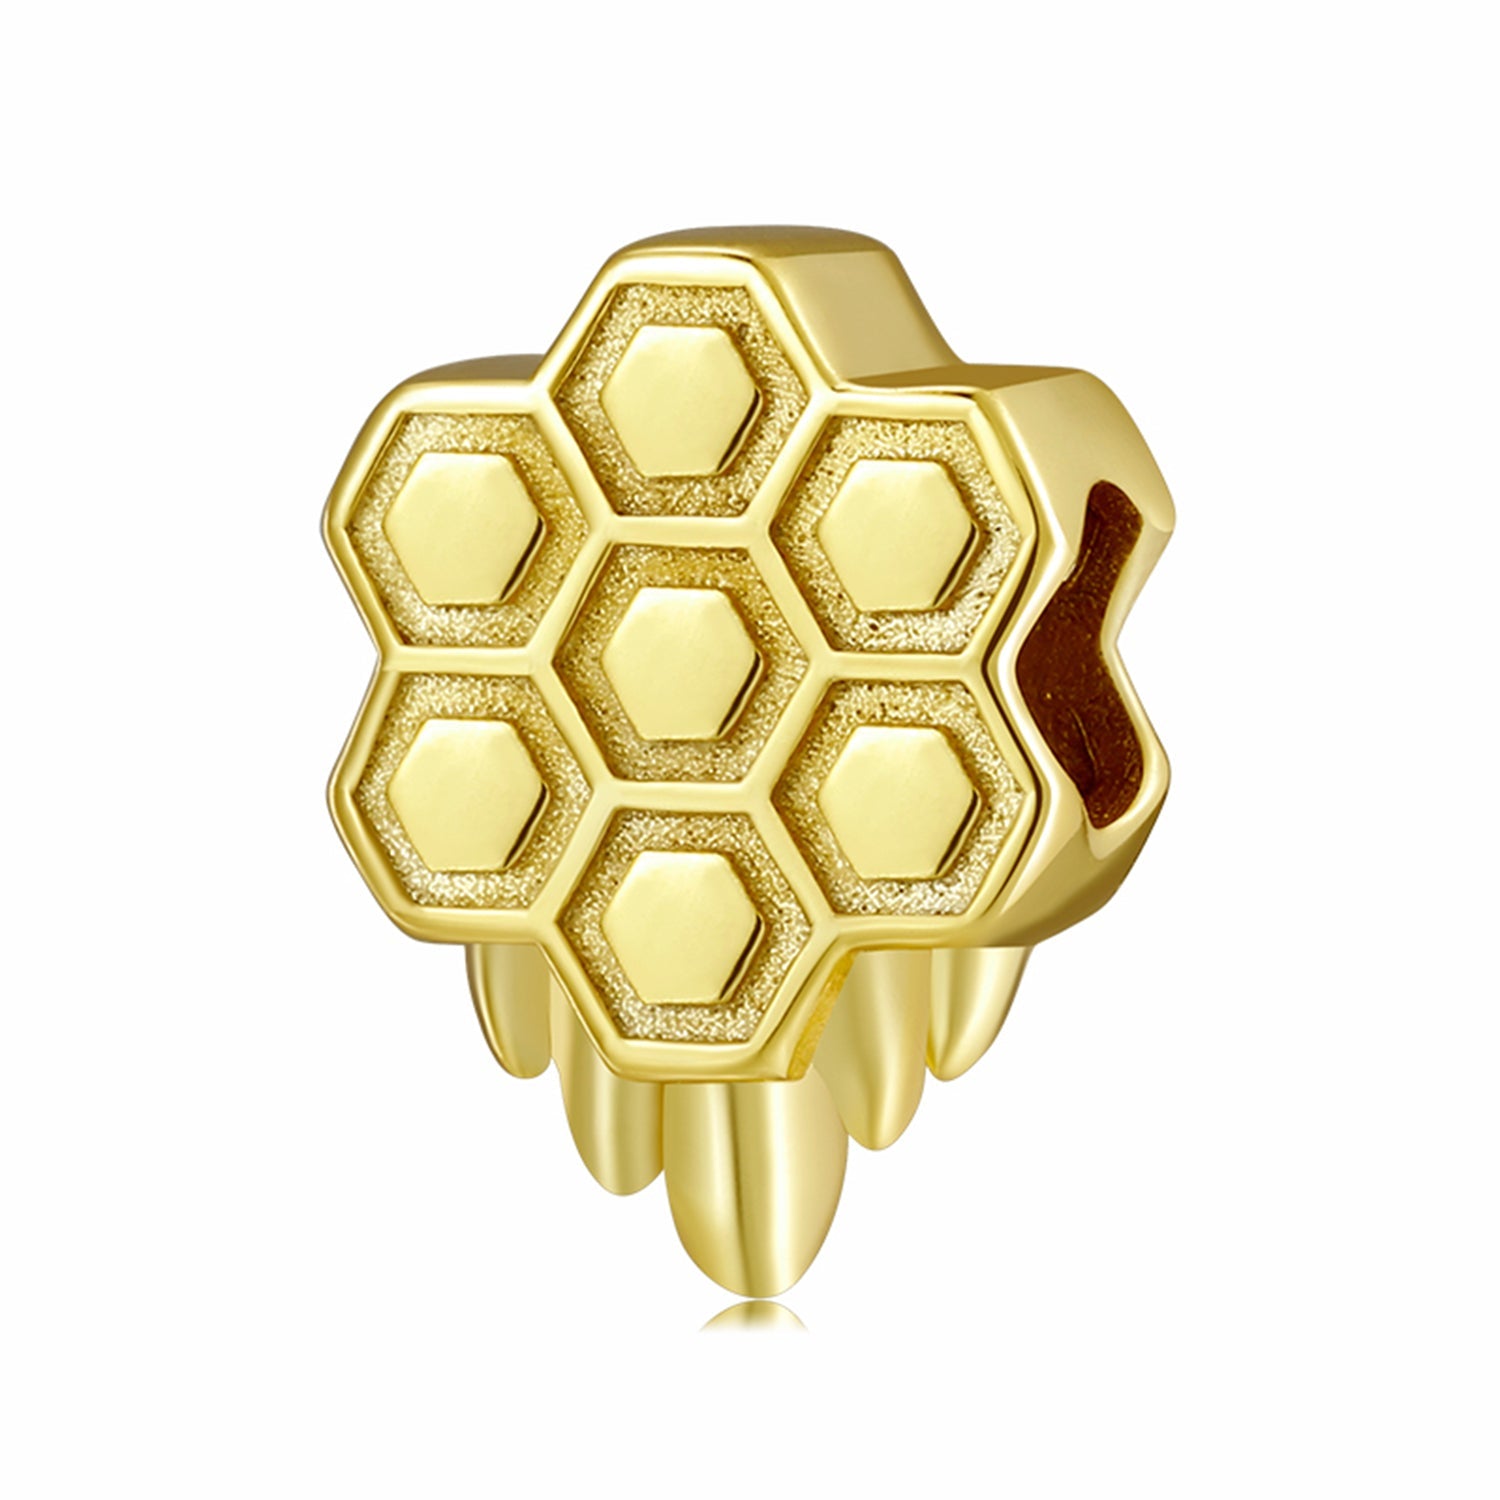 Golden honeycombs